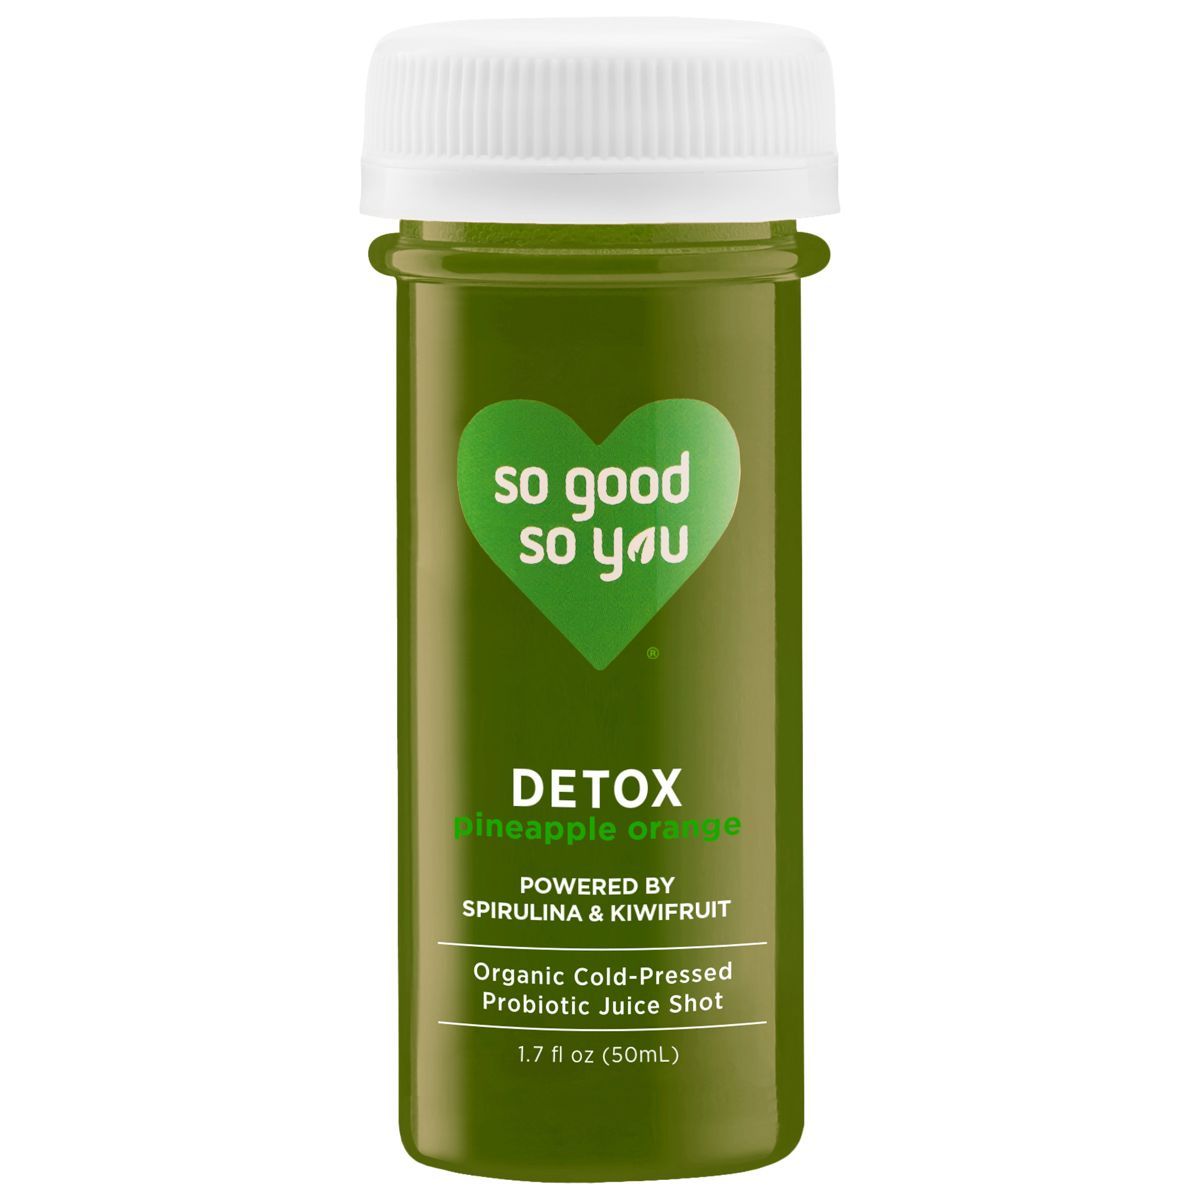 So Good So You Detox Pineapple Orange Organic Probiotic Shot - 1.7 fl oz | Target